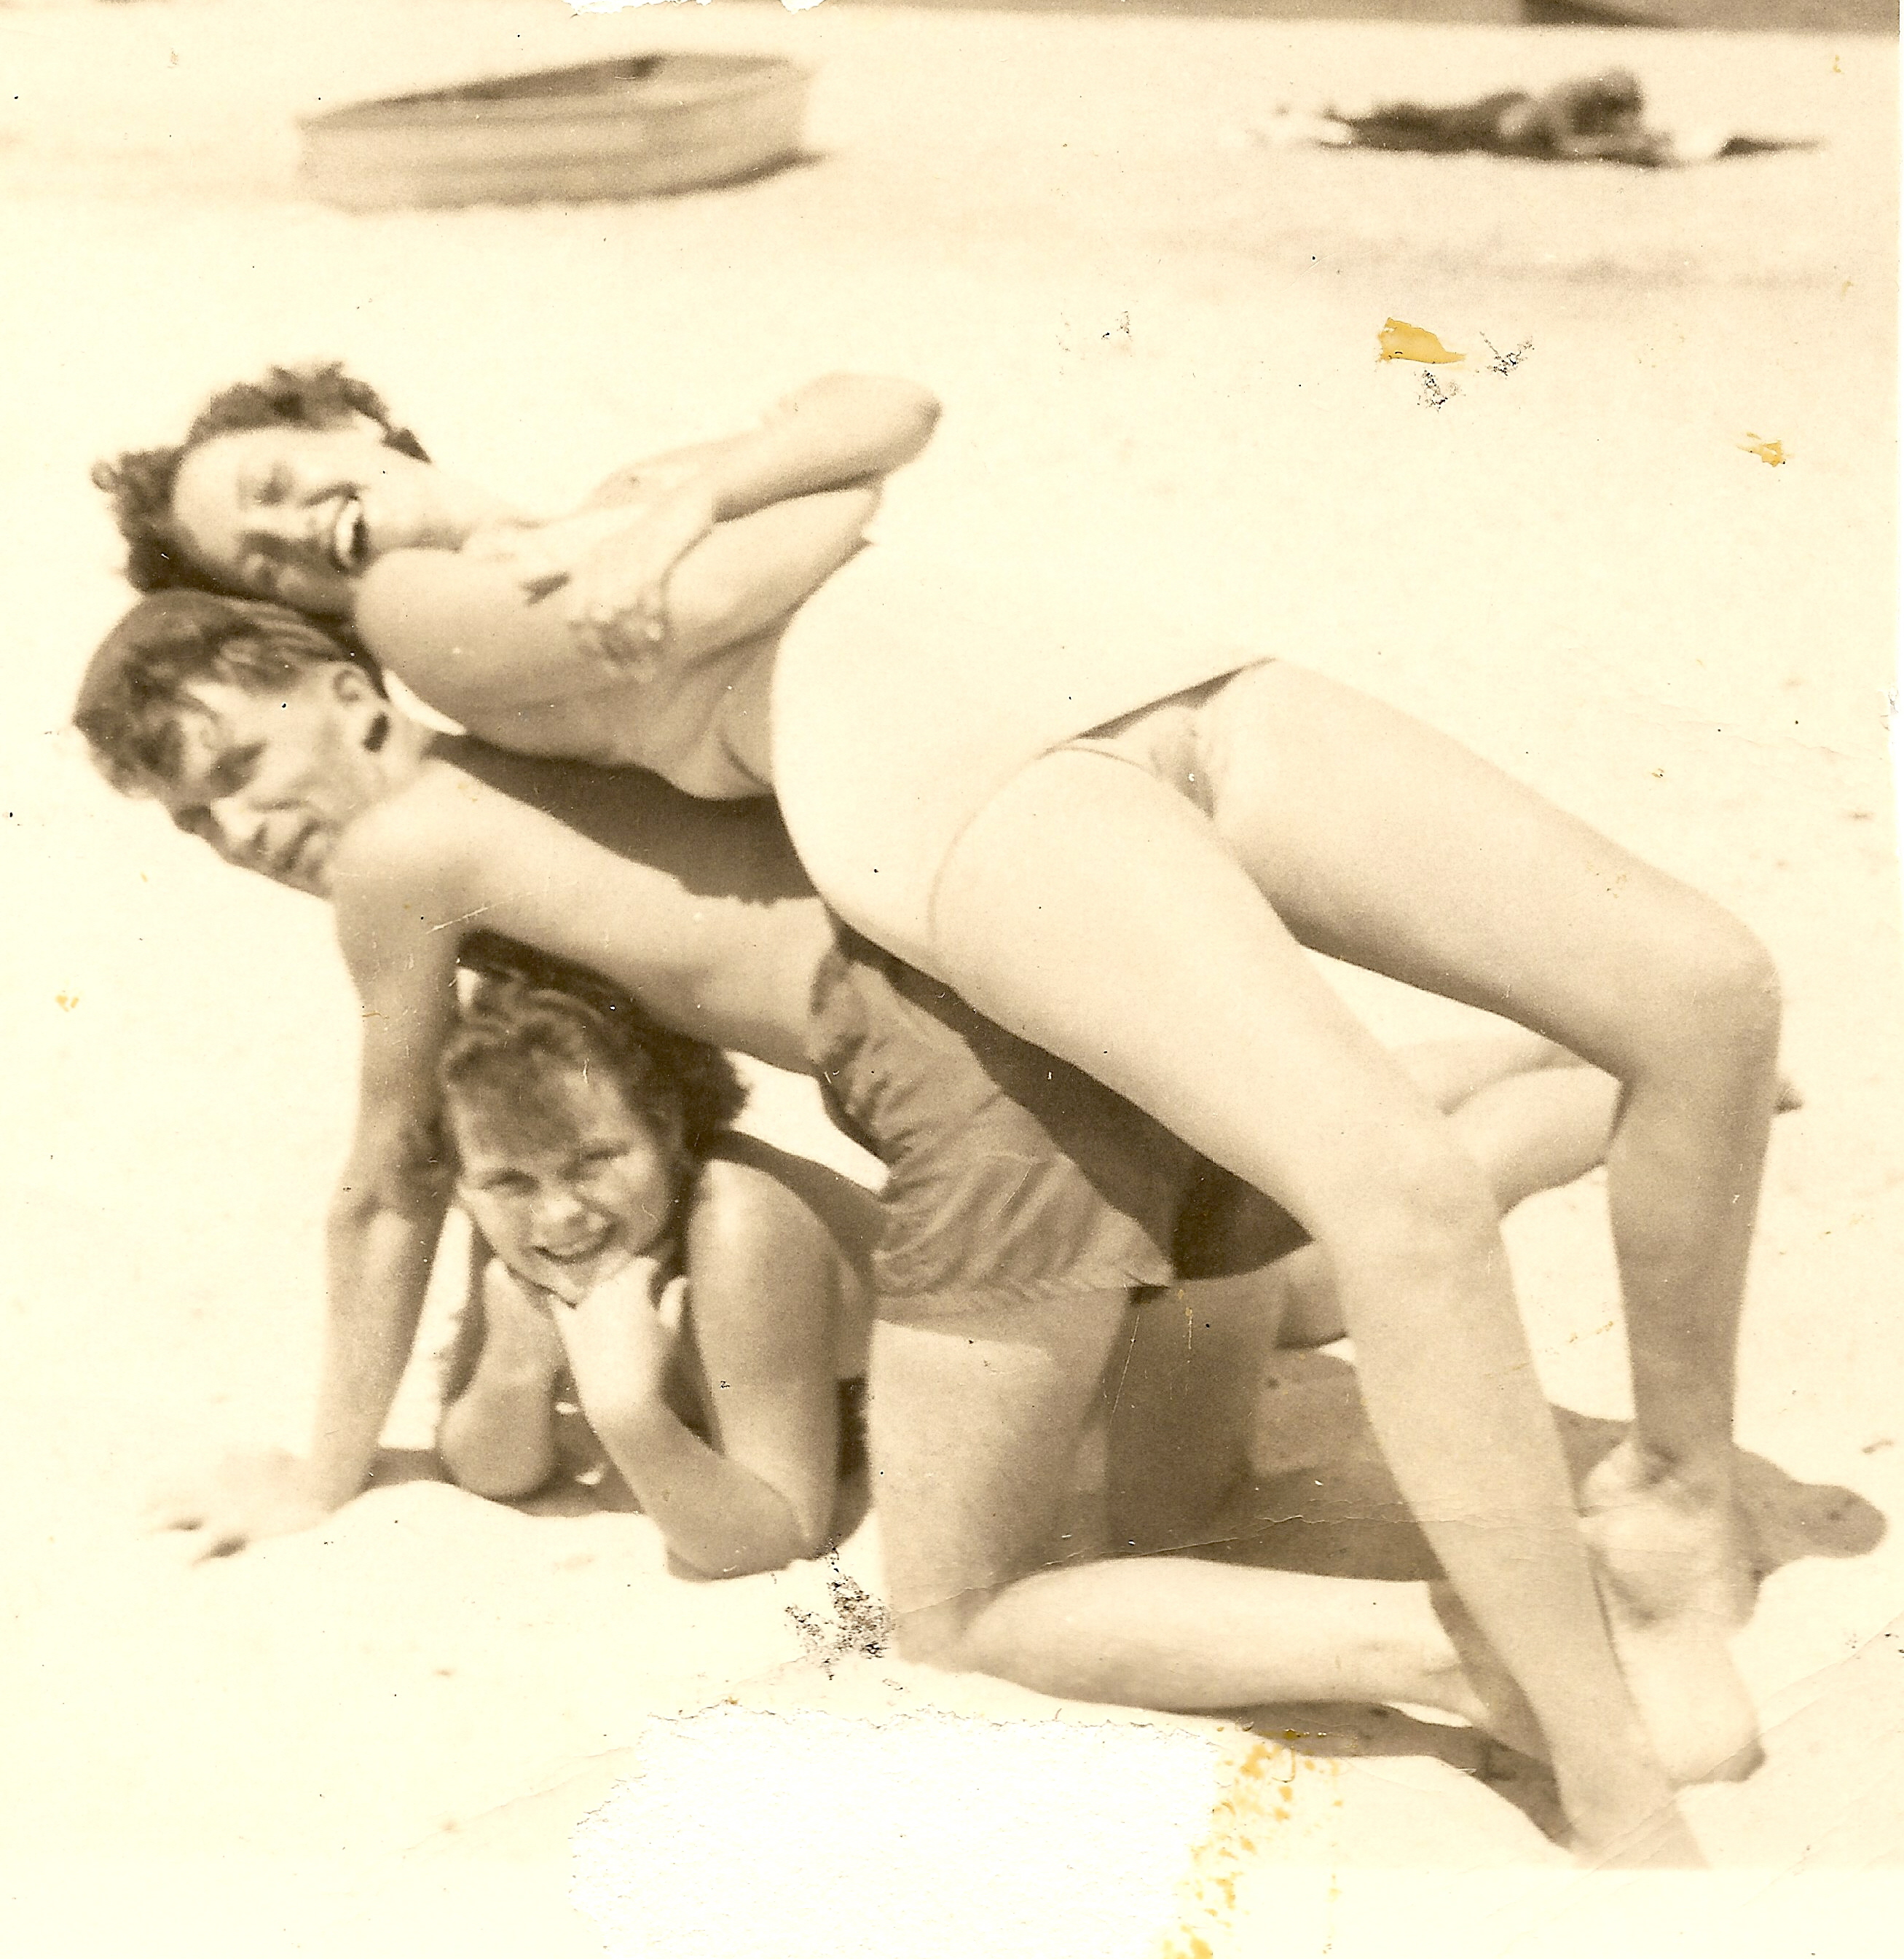 http://onevintagephoto.files.wordpress.com/2008/09/1950s-mom-dad-wildwood-beach.jpg